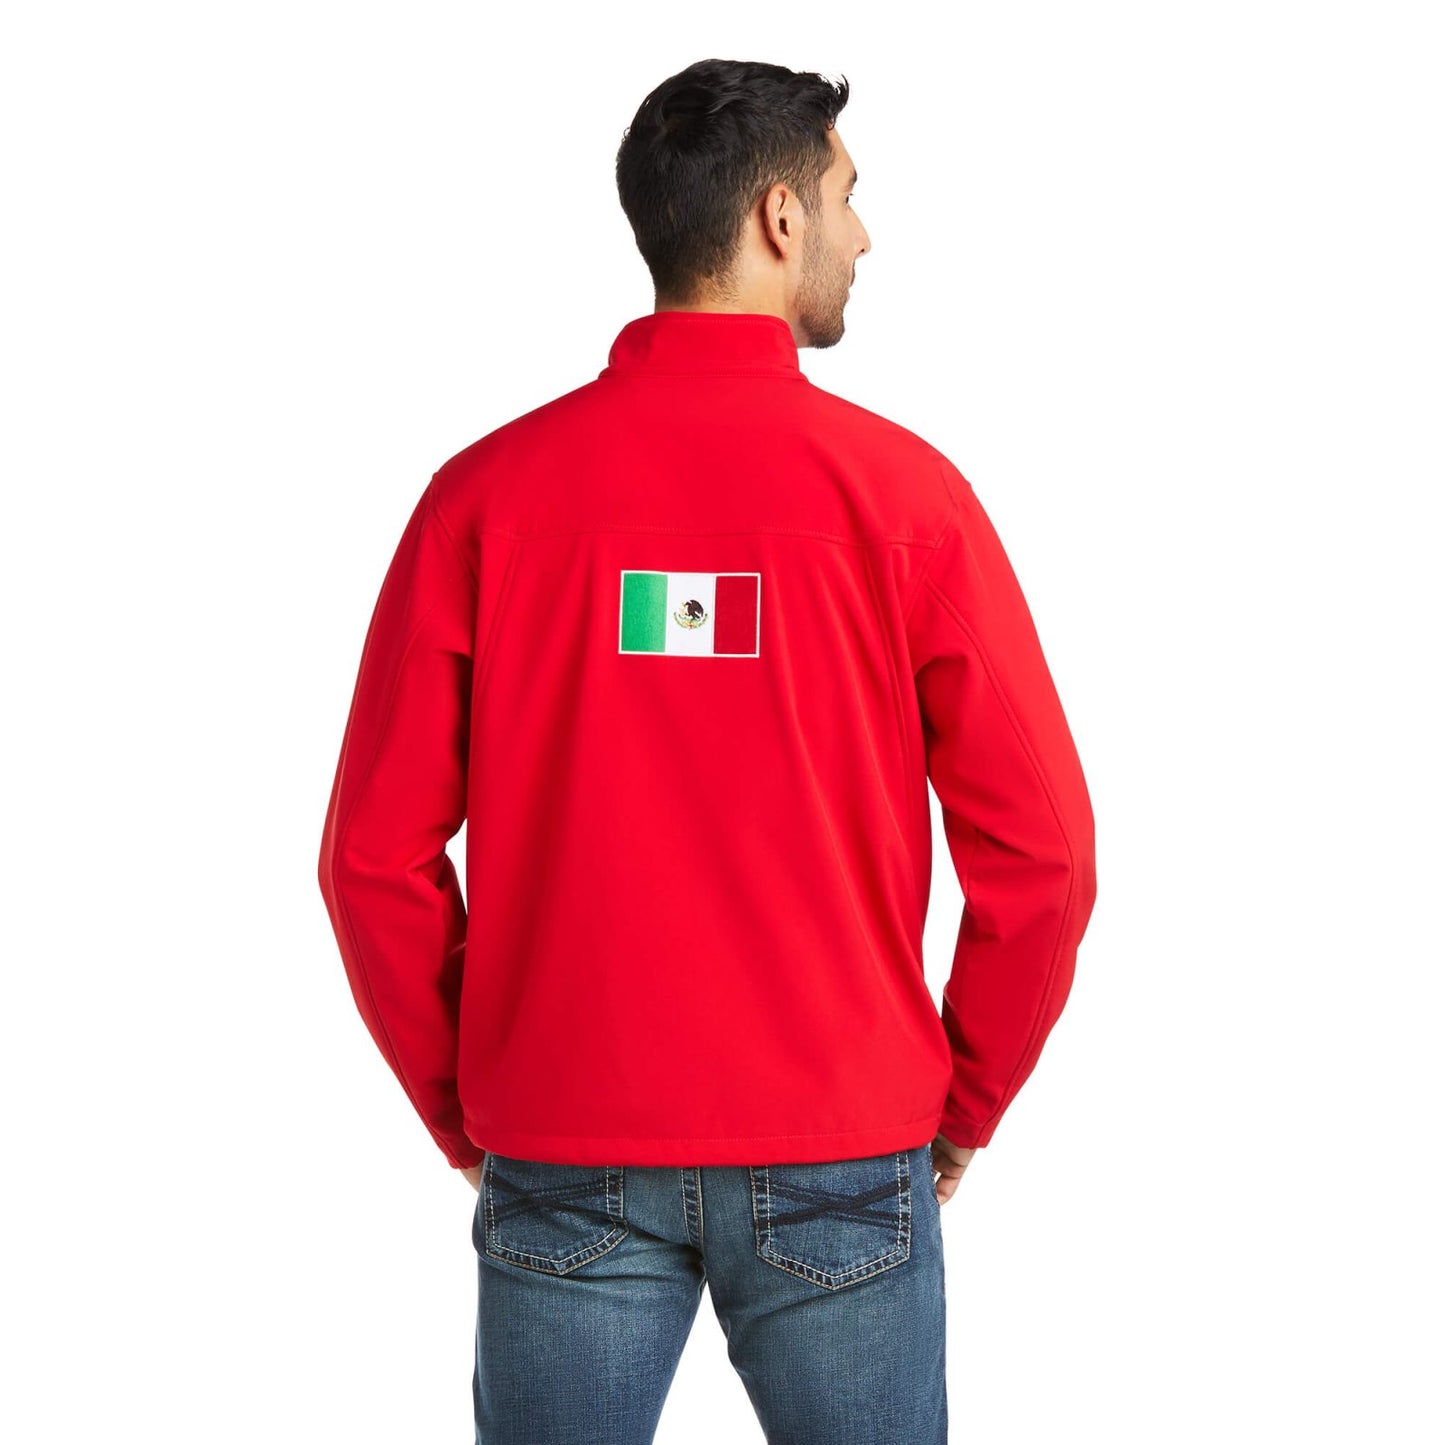 Ariat Mexico Flag Team Softshell Jacket - Red